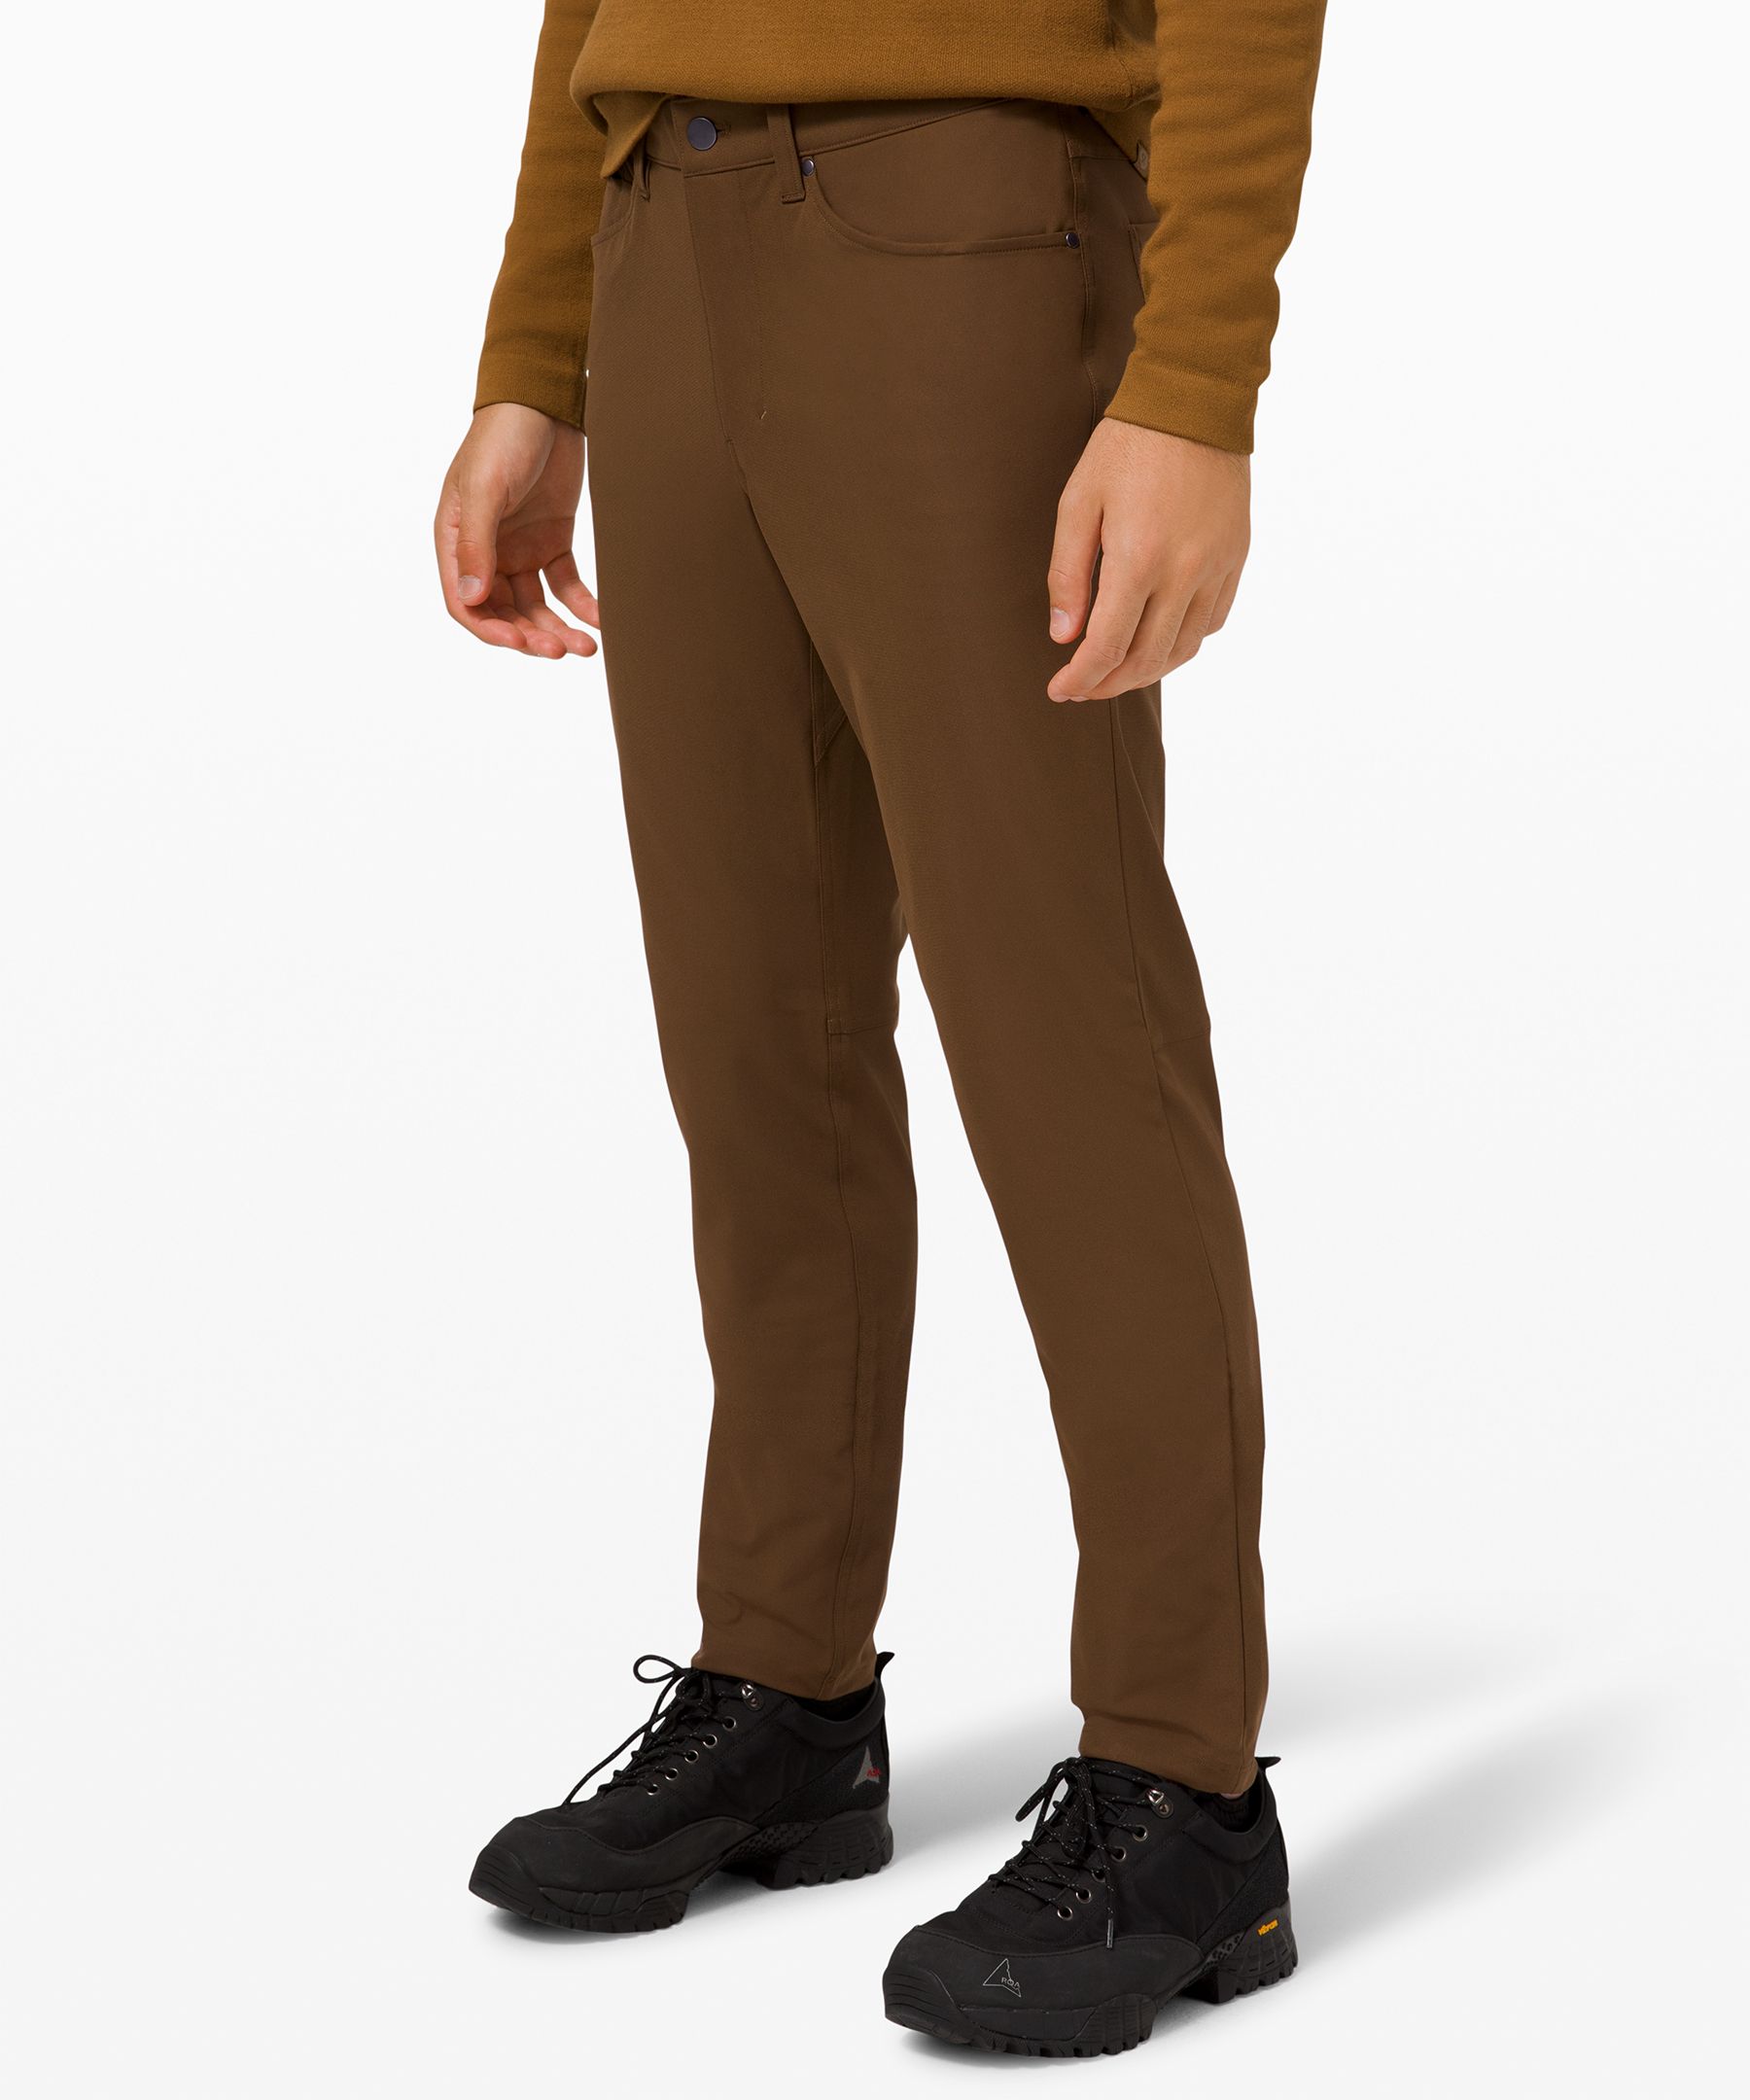 lululemon khaki pants mens